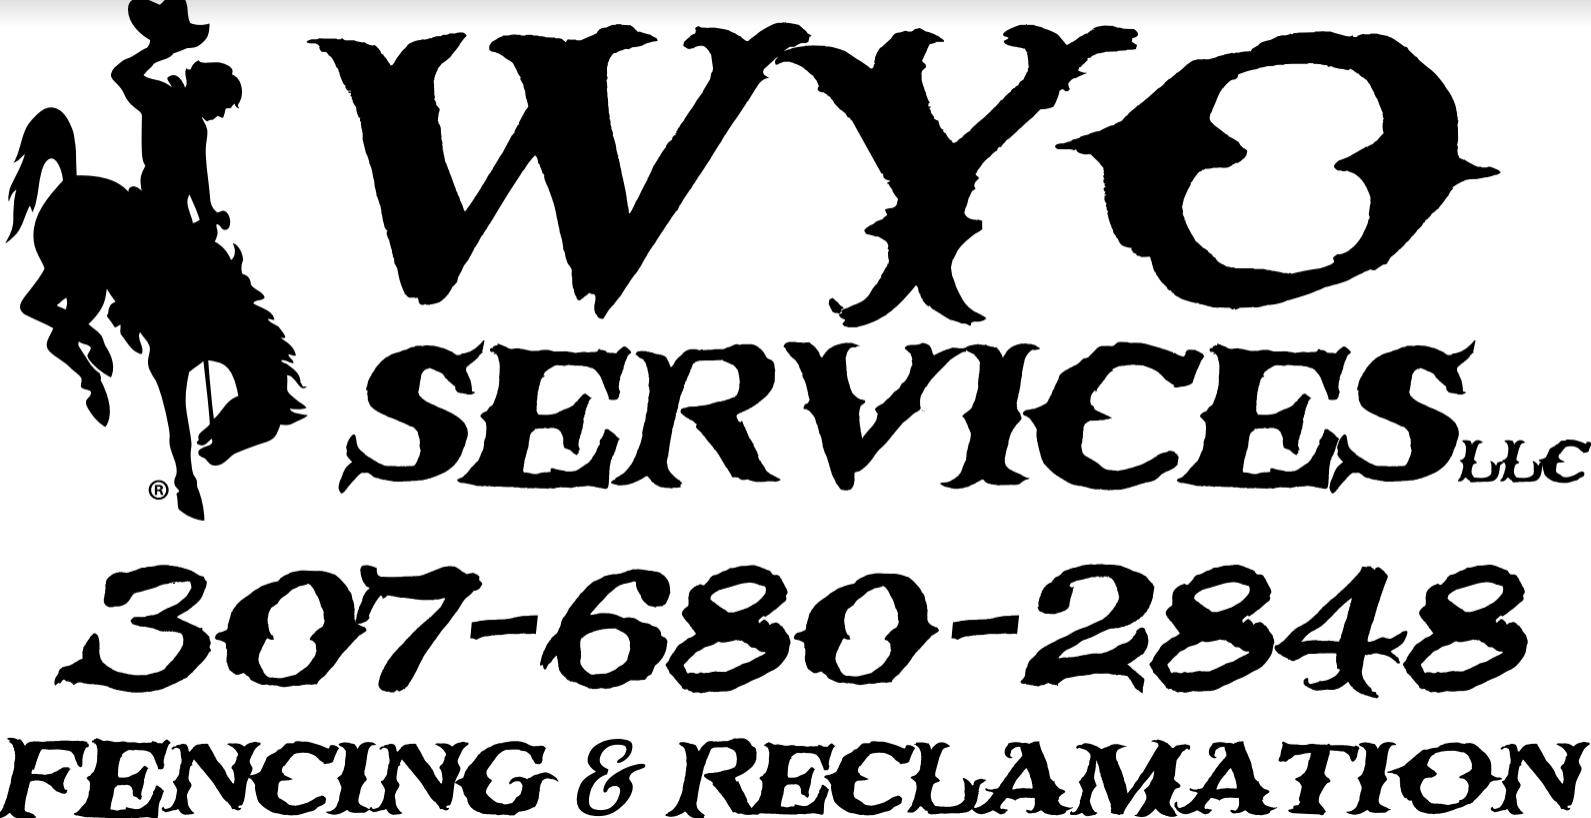 WYO Services, LLC's Image